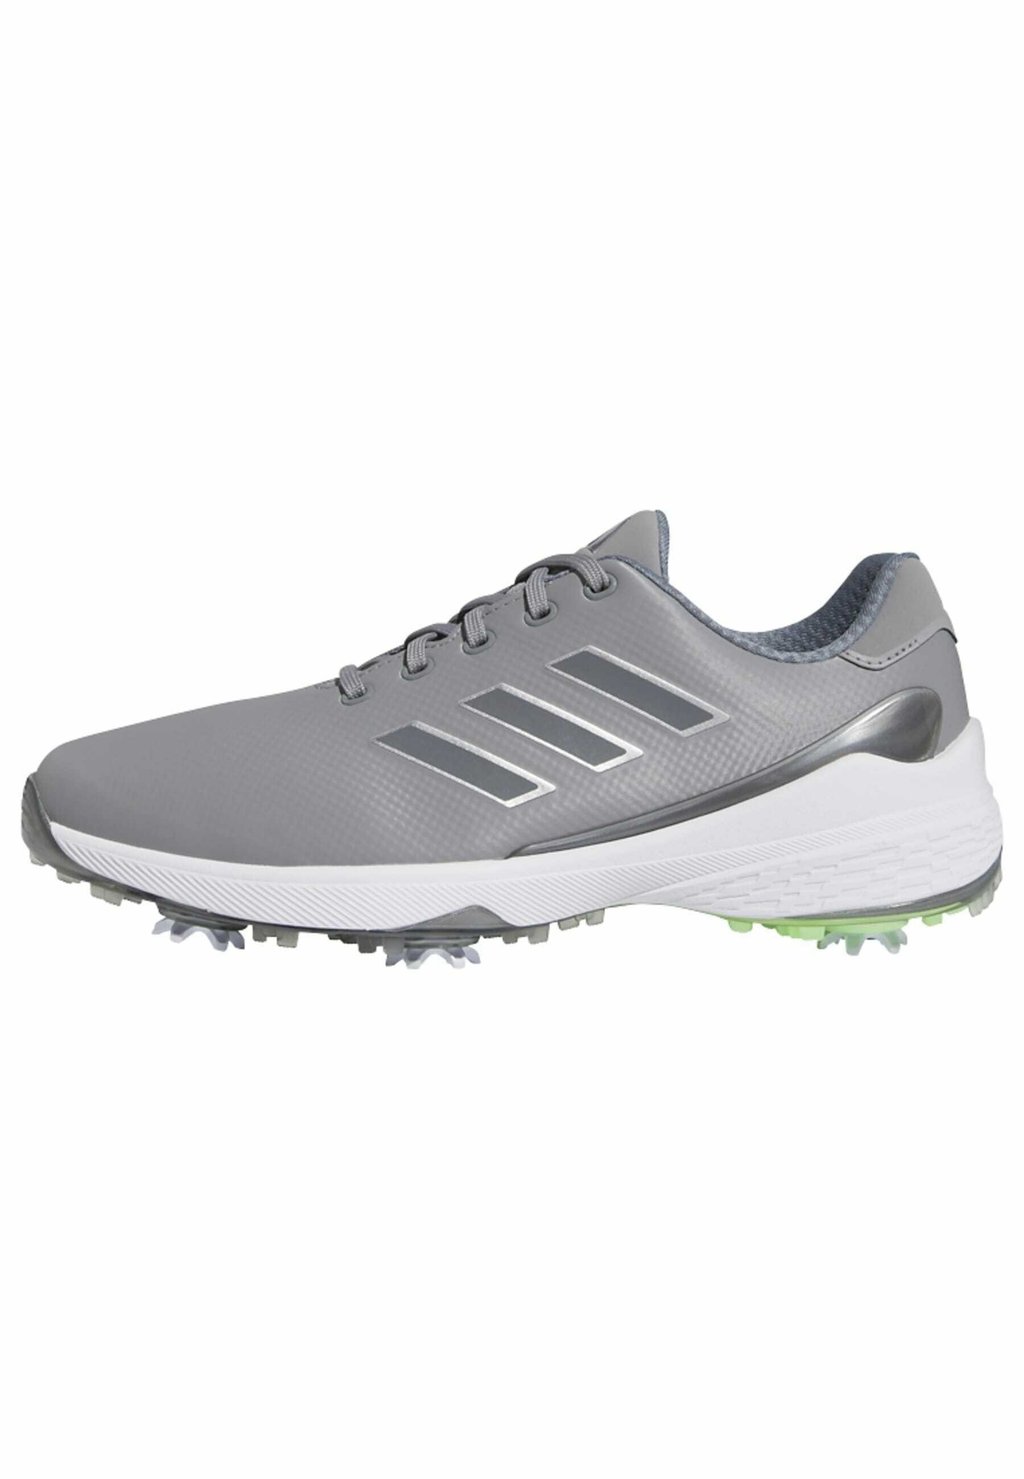 кроссовки nike sportswear air max 97 tu white metallic dark grey metallic silver iron grey Туфли для гольфа adidas Golf, серый три железа металлик серебристый металлик